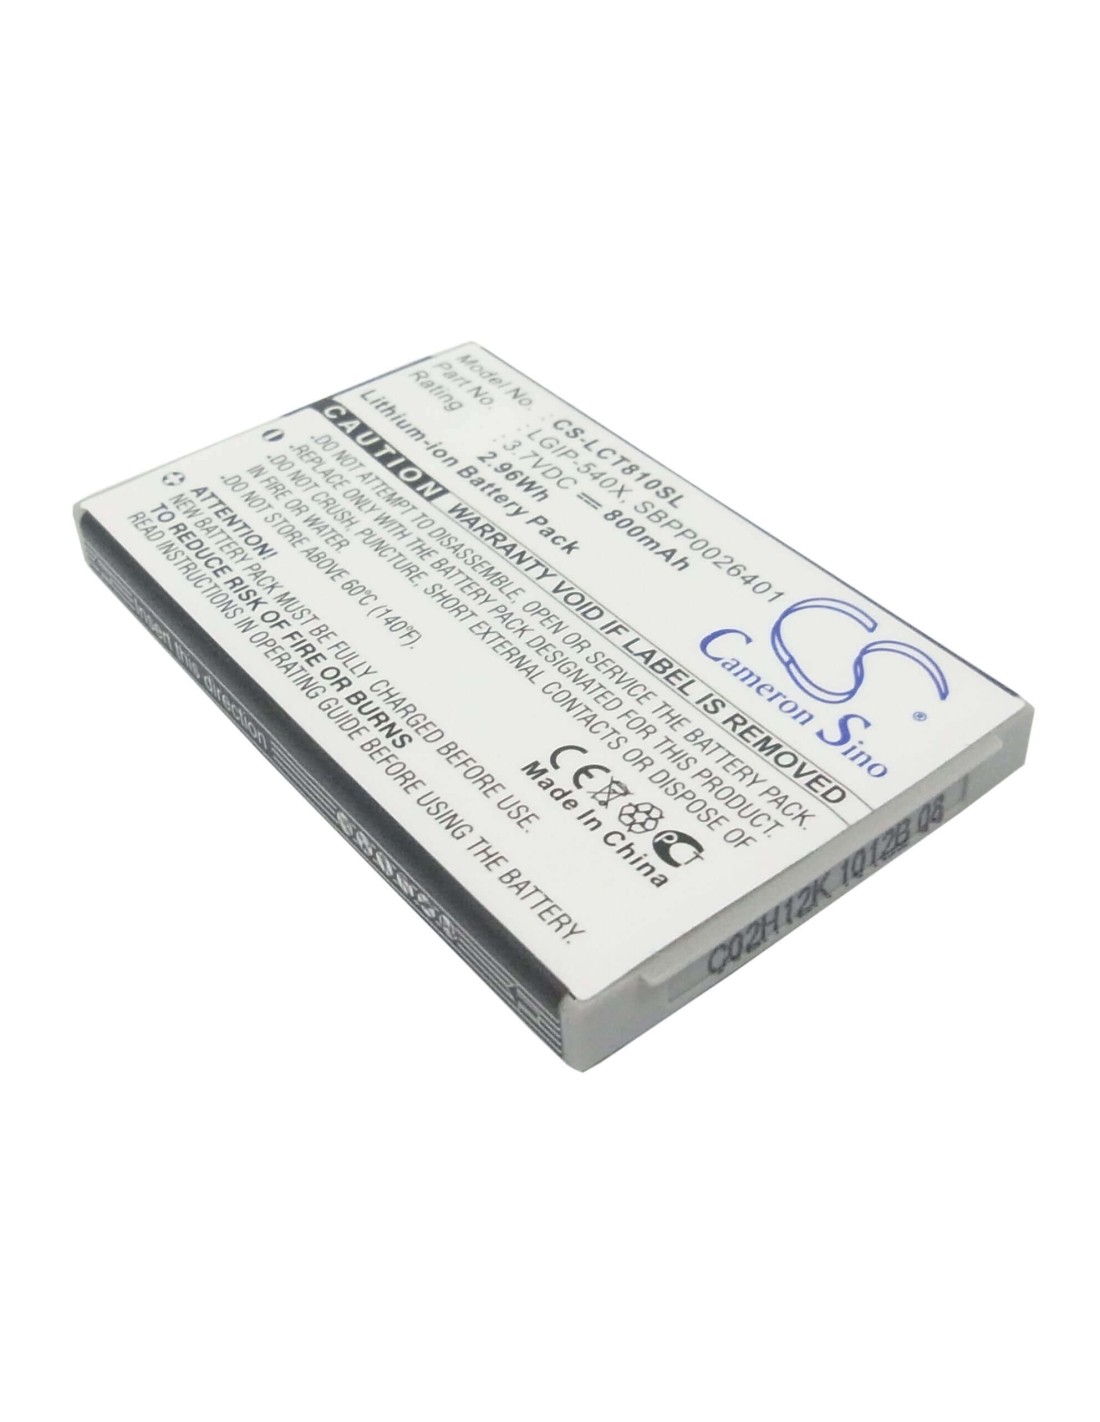 Battery for LG CT810, CT810 Incite, Incite 3.7V, 800mAh - 2.96Wh